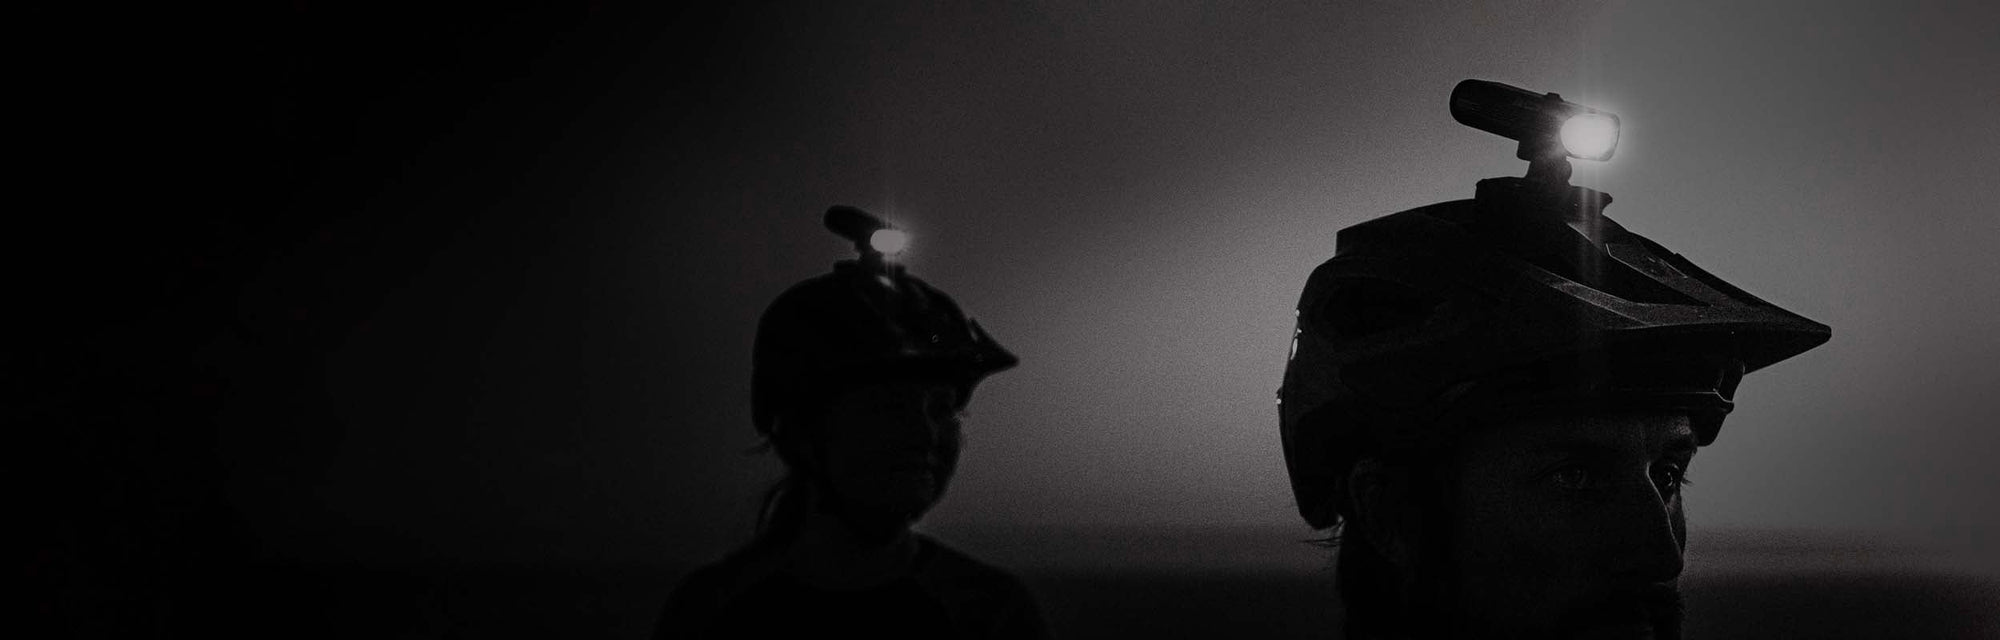 2 bicycle helmet lights mounted on helmet that people are wearing on a dark background.